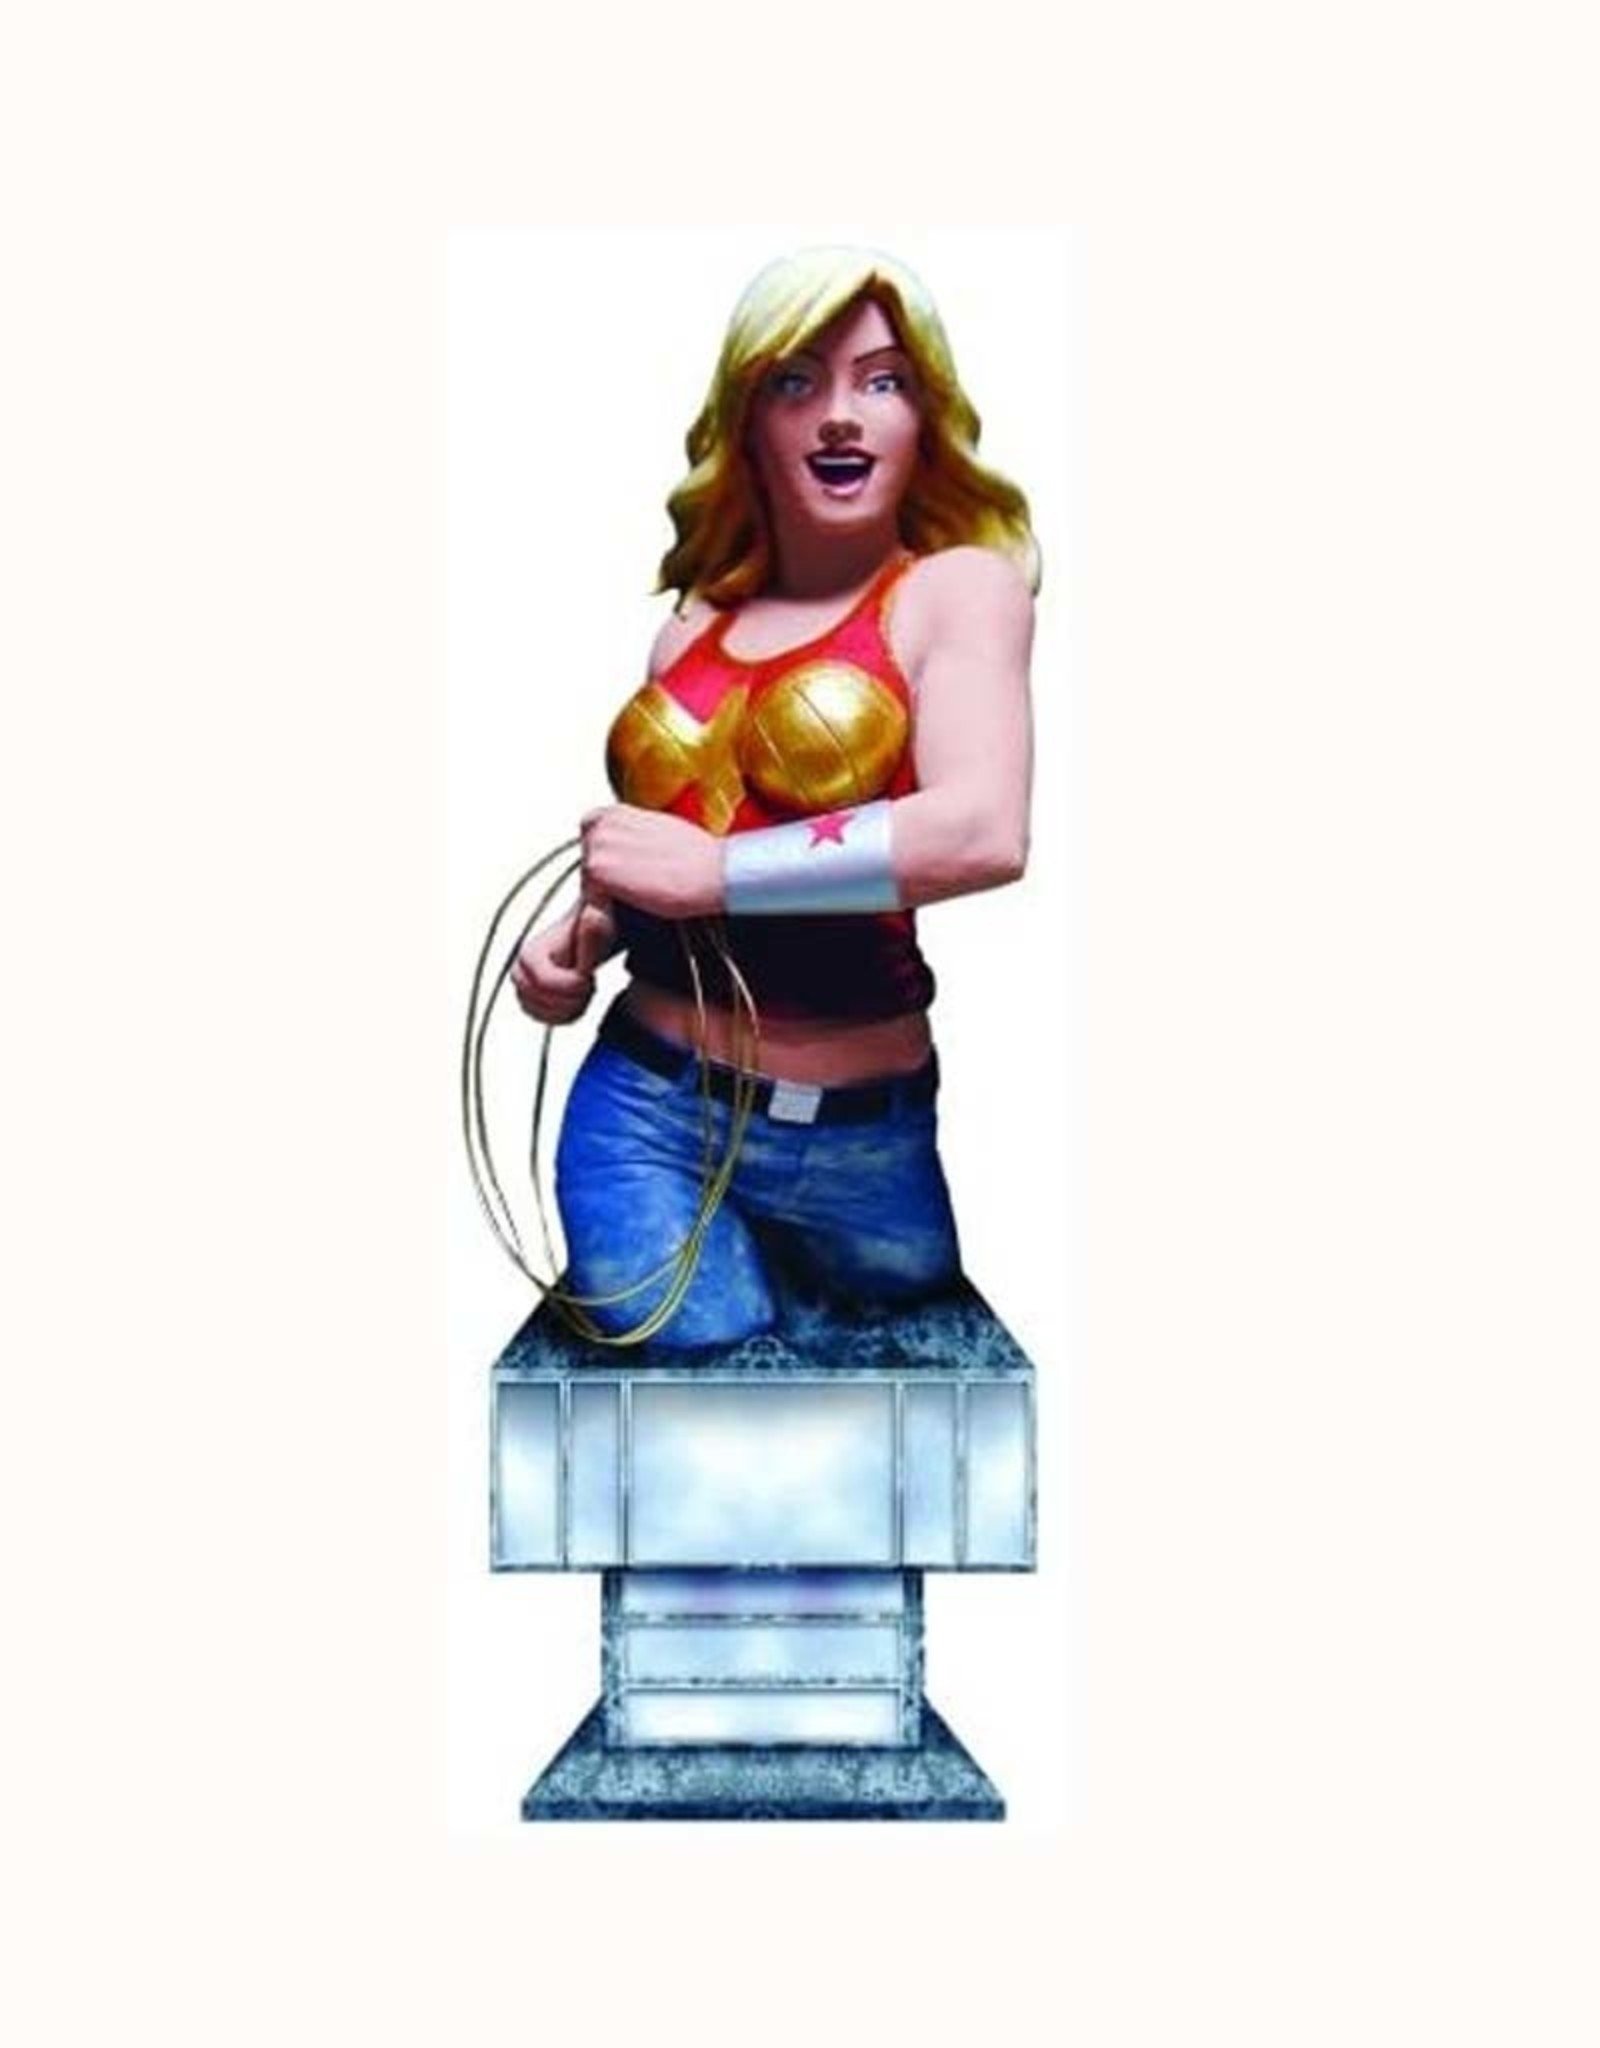 DC Comics Women of the DC Universe: Series 2: Wonder Girl Bust